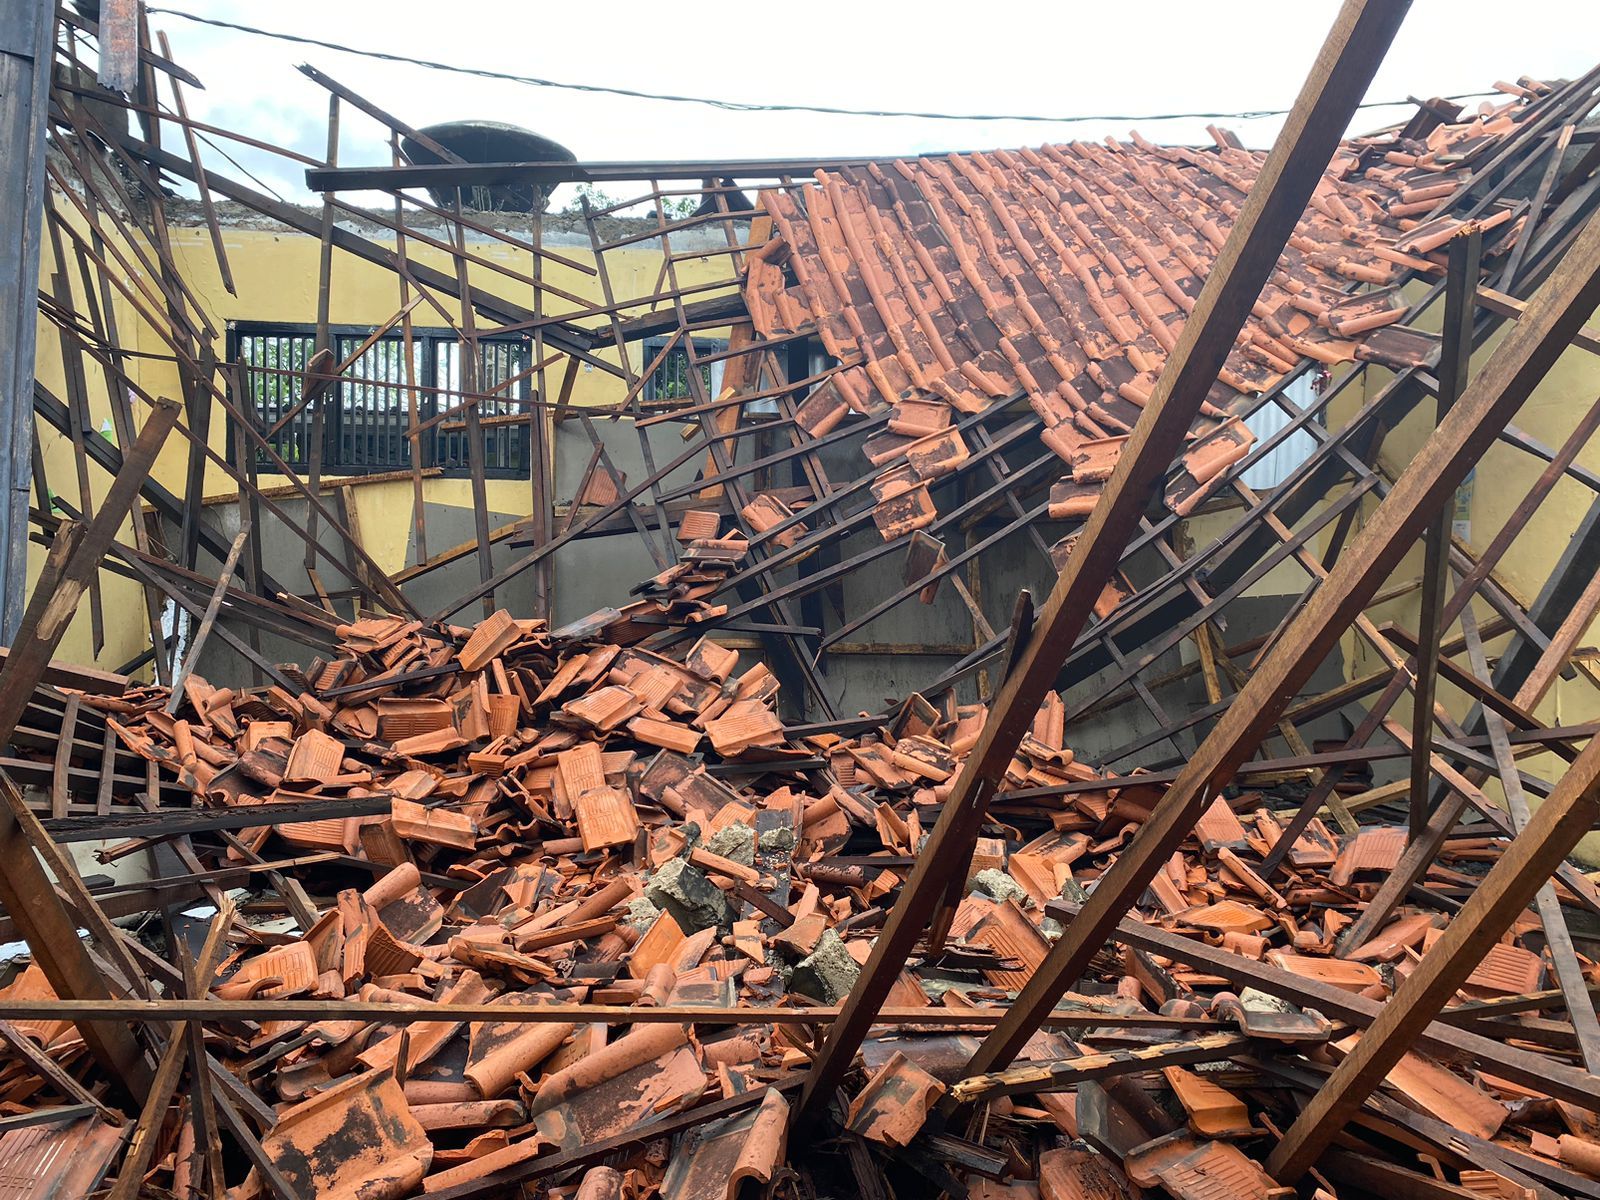 Serangan Rayap Salah Satu Penyebab Ambruknya Bangunan UPTD SDN Kedaung Depok